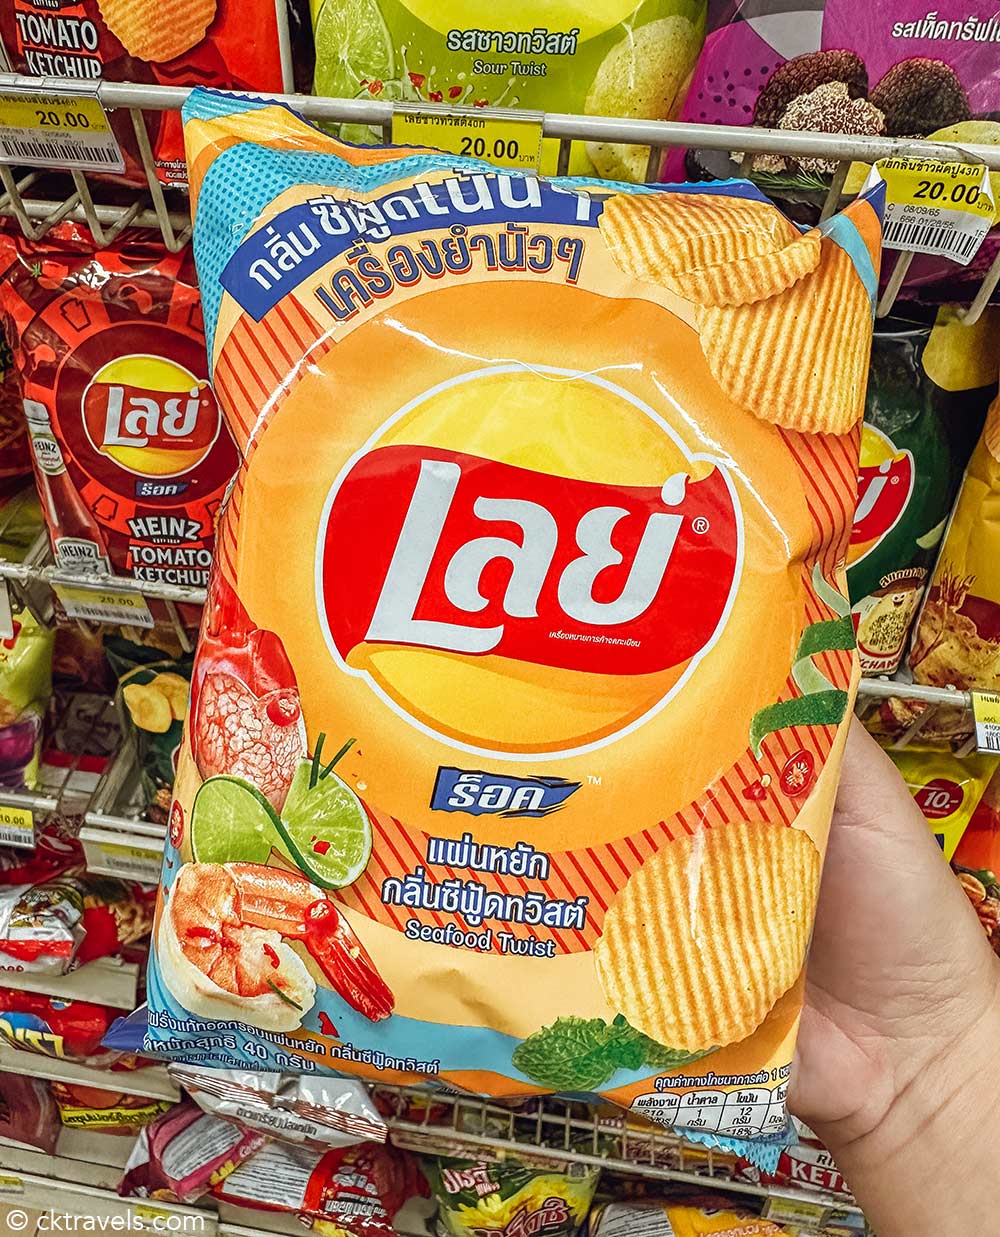 Lay’s seafood twist flavoured potato chips crisps Thailand 7-eleven